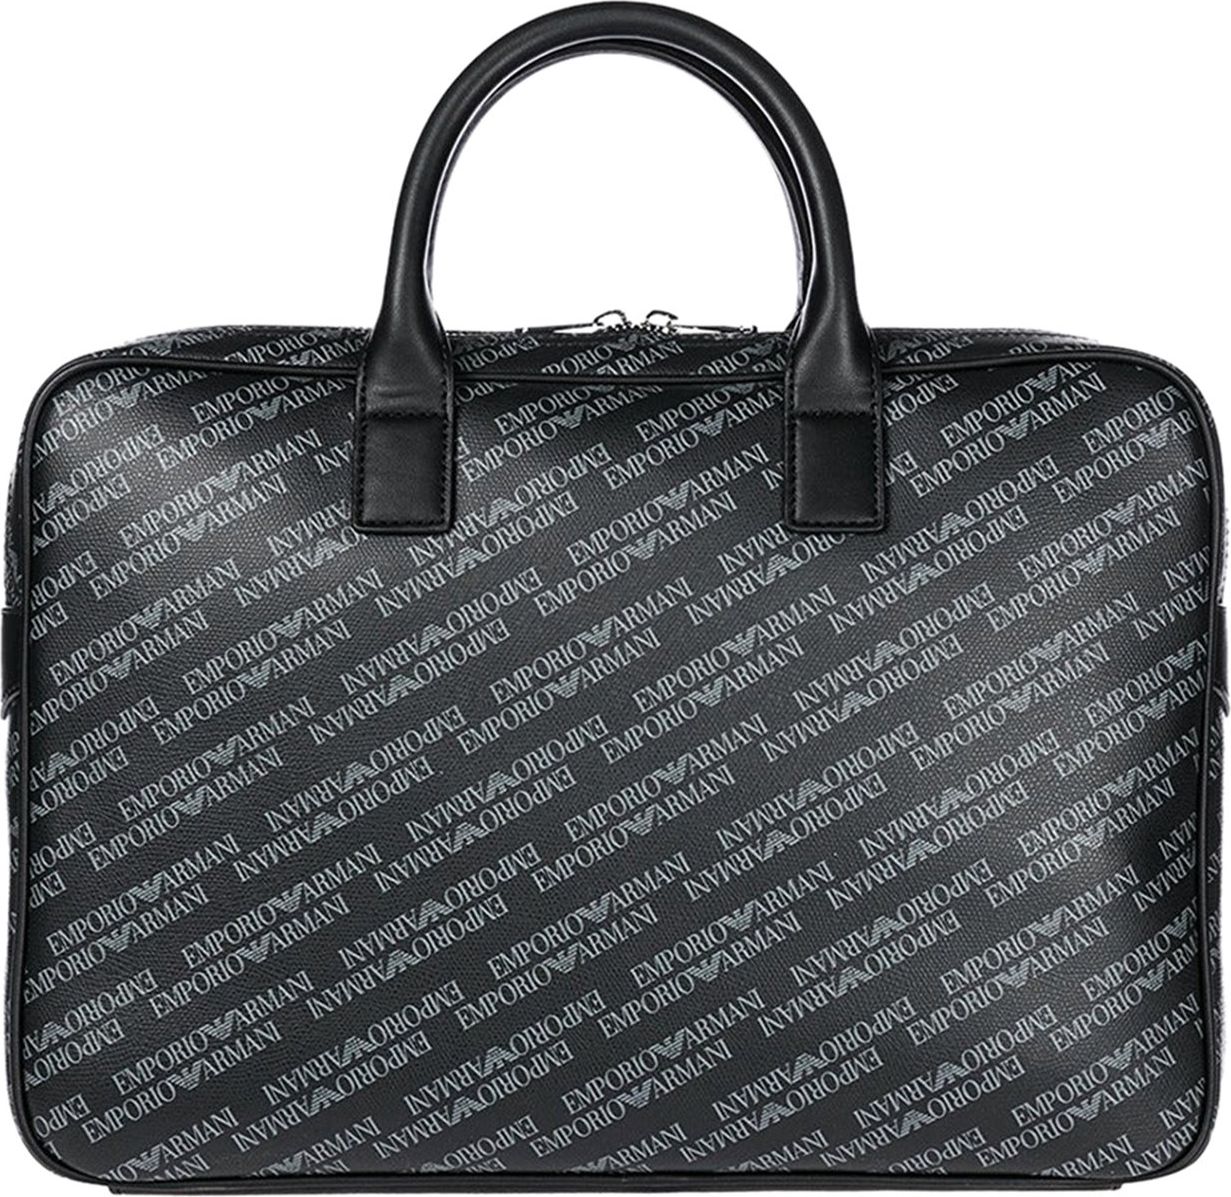 Emporio Armani Emporio Armani black bag man leather logo mod.Y4P092-ylo7e Zwart